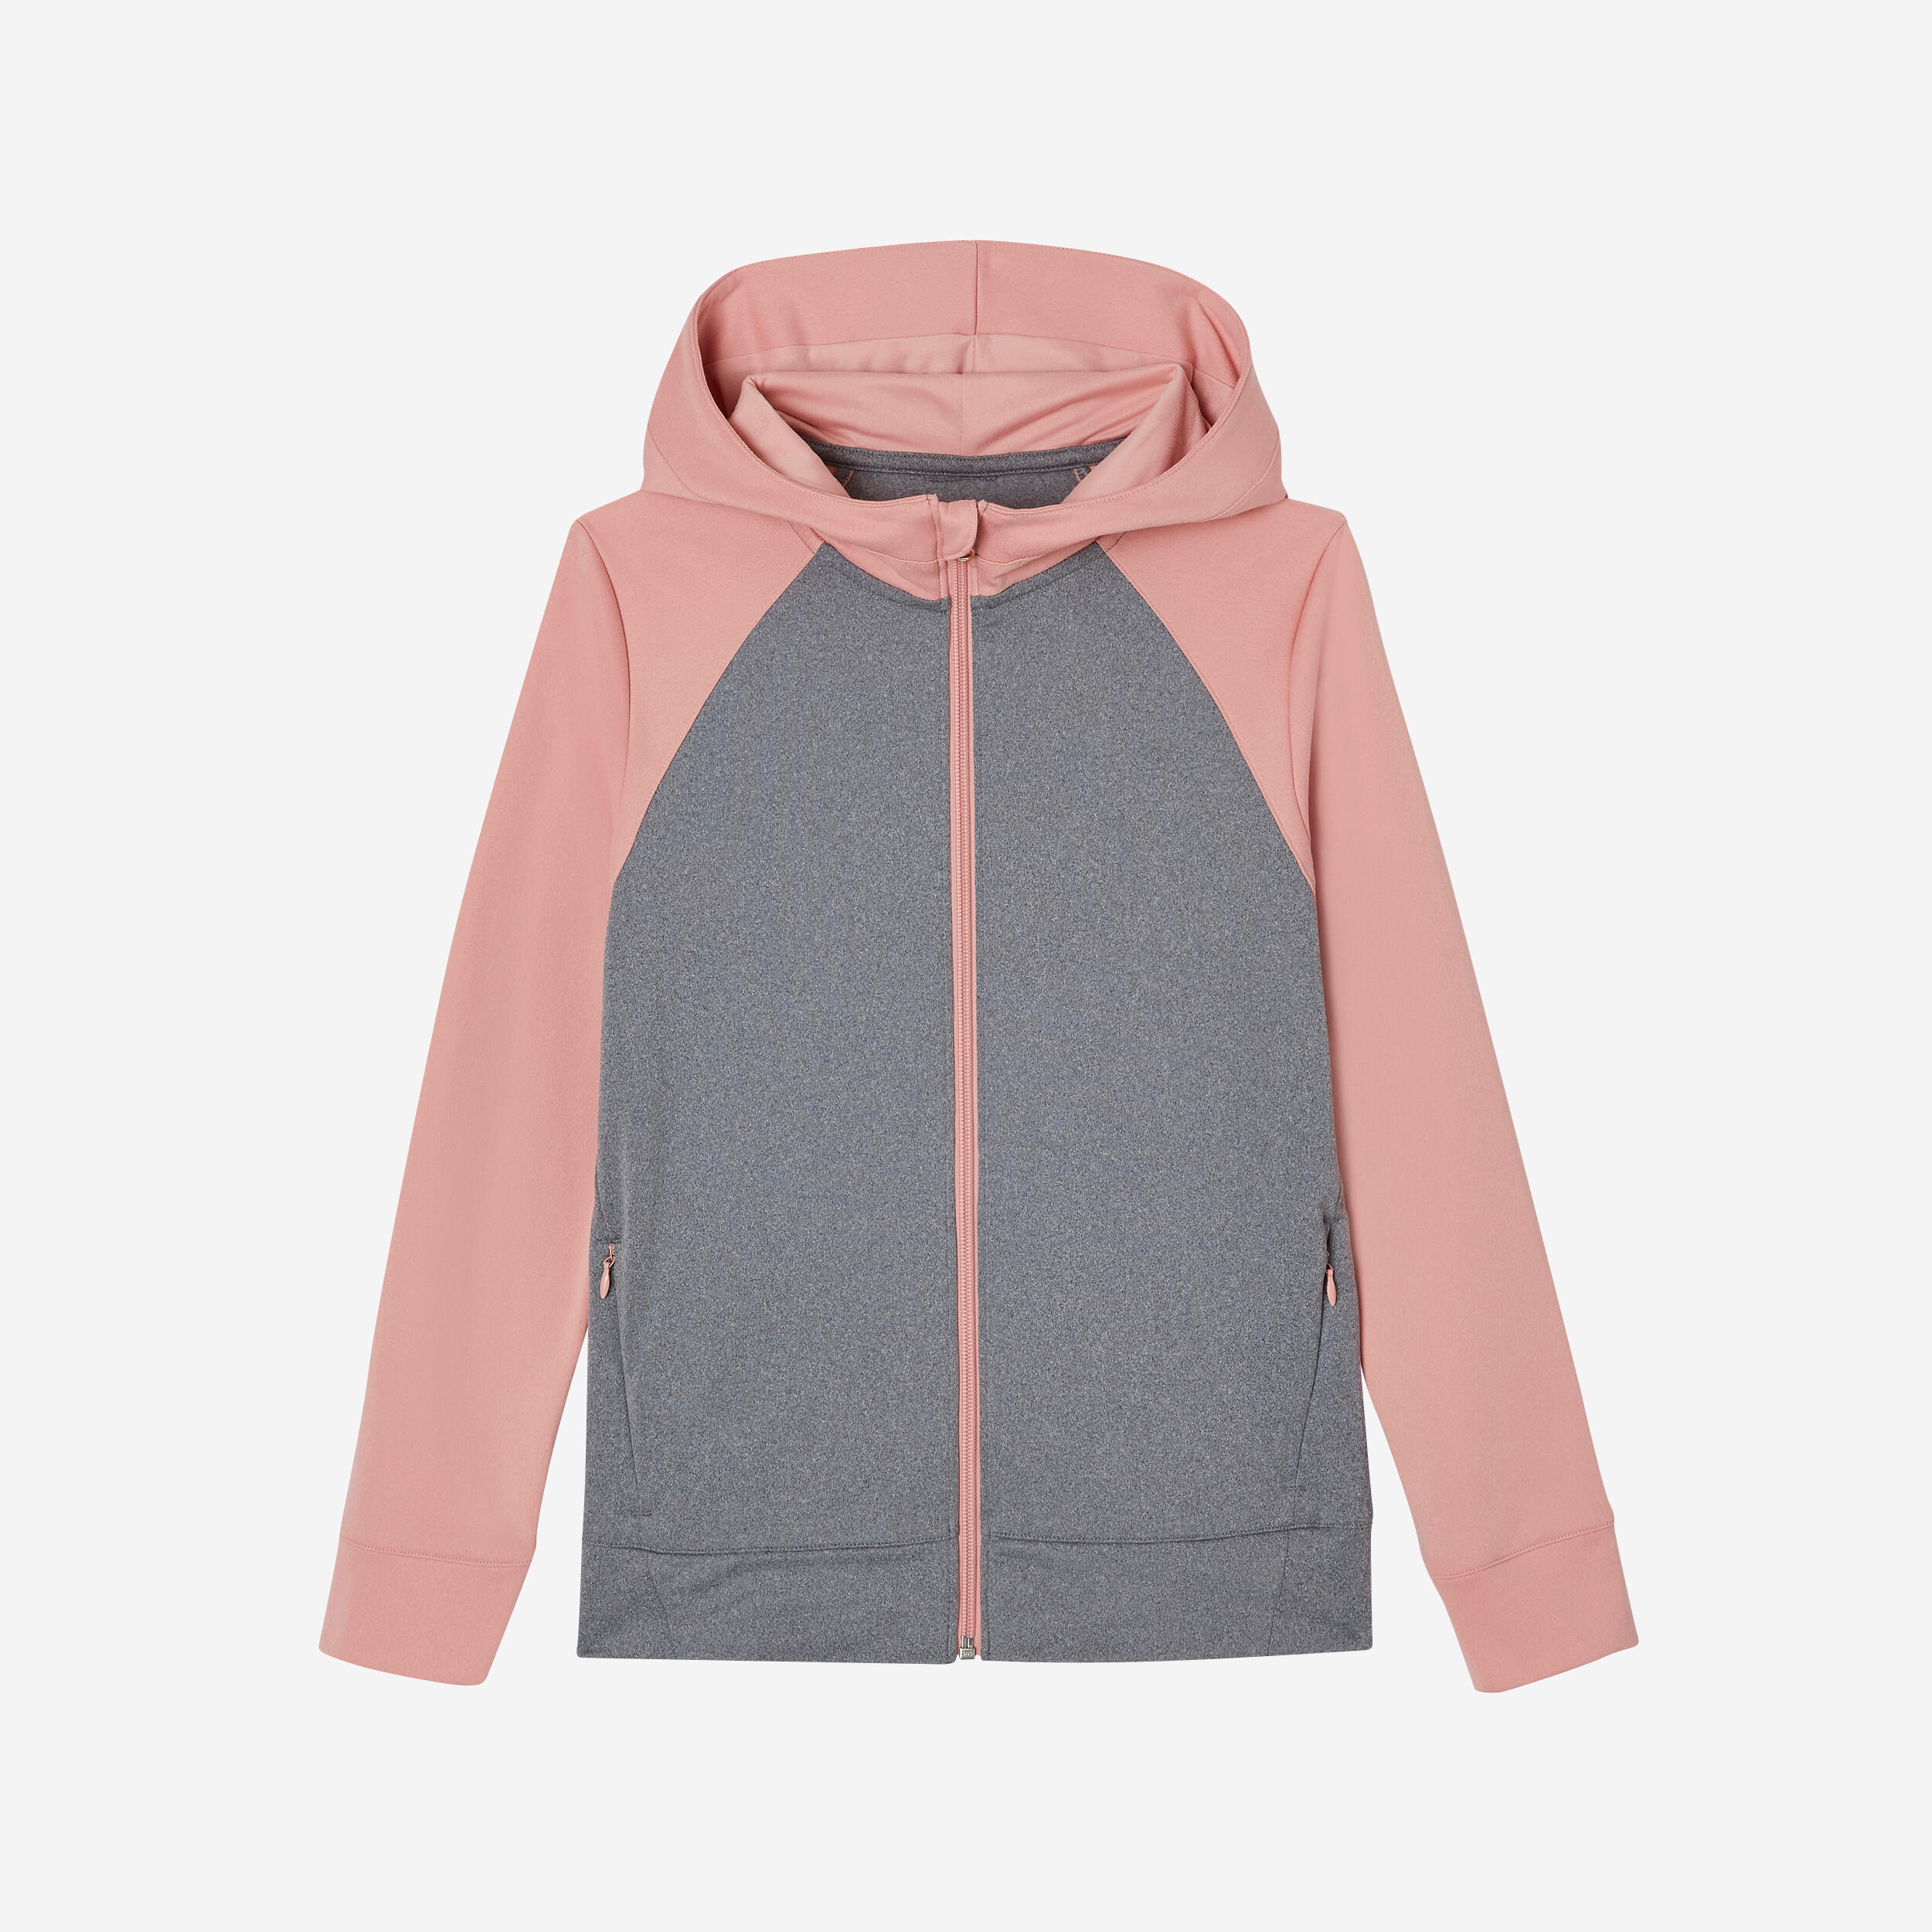 DOMYOS Girls' Warm Breathable Gym Jacket S500 - Pink/Grey